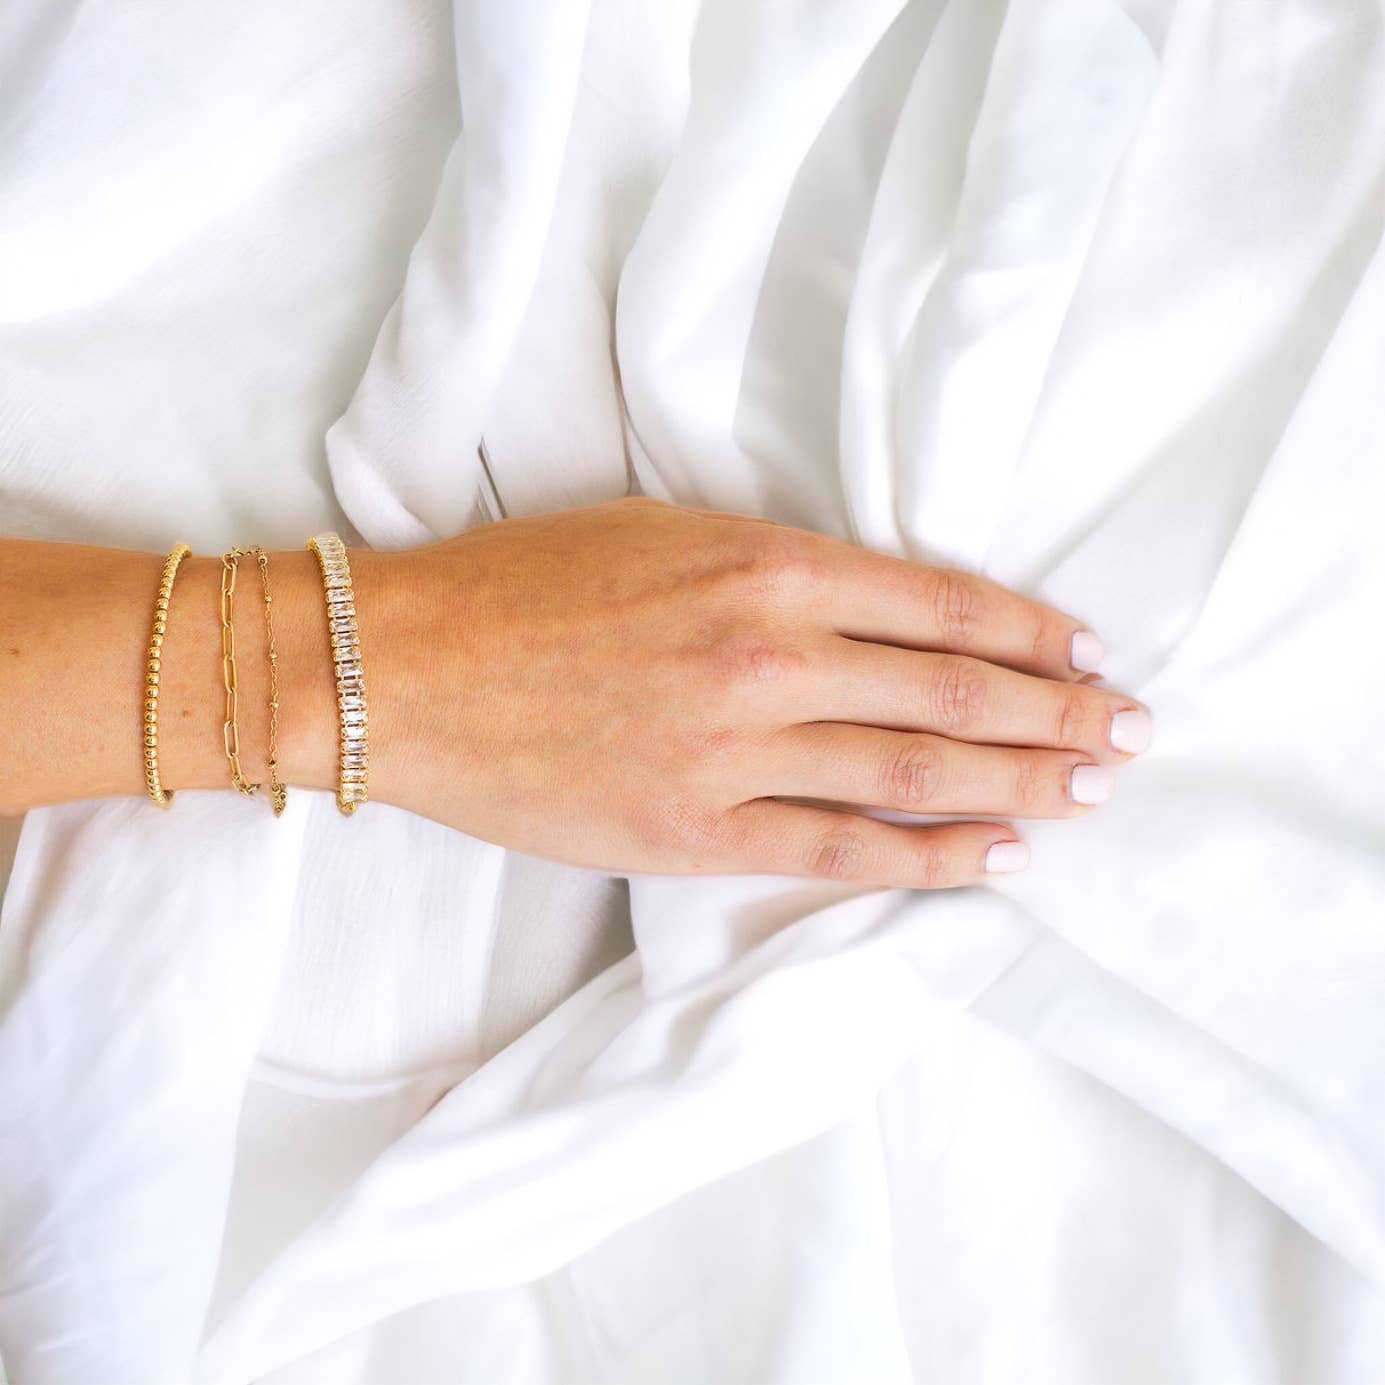 Gold Filled Luxe Beaded Bracelet: 5MM